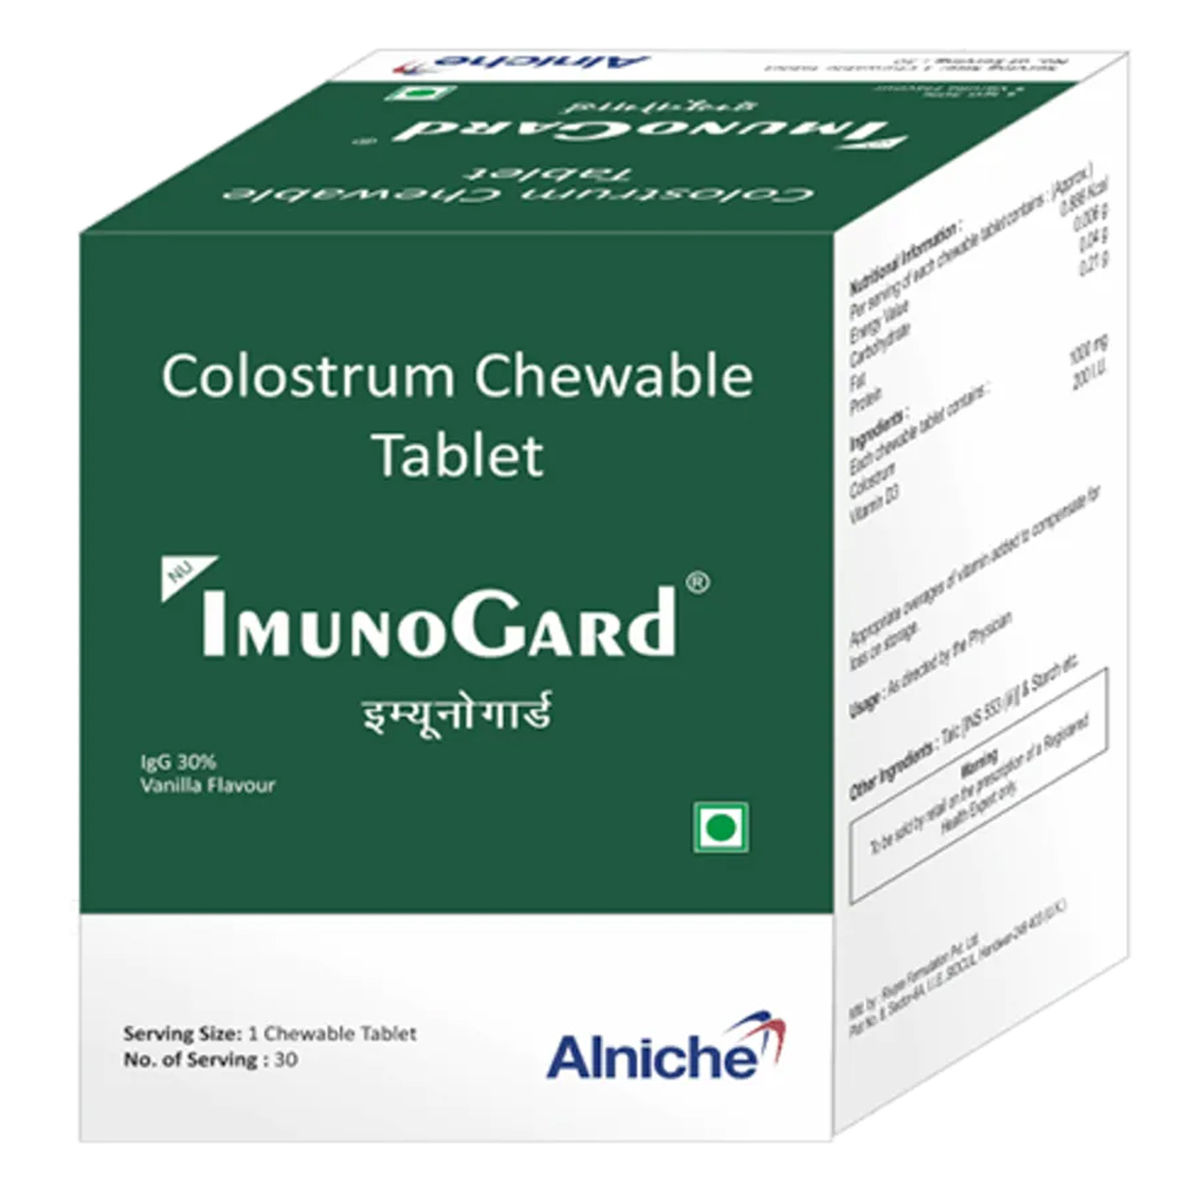 Buy Imunogard Chewabale Tablet 30's Online